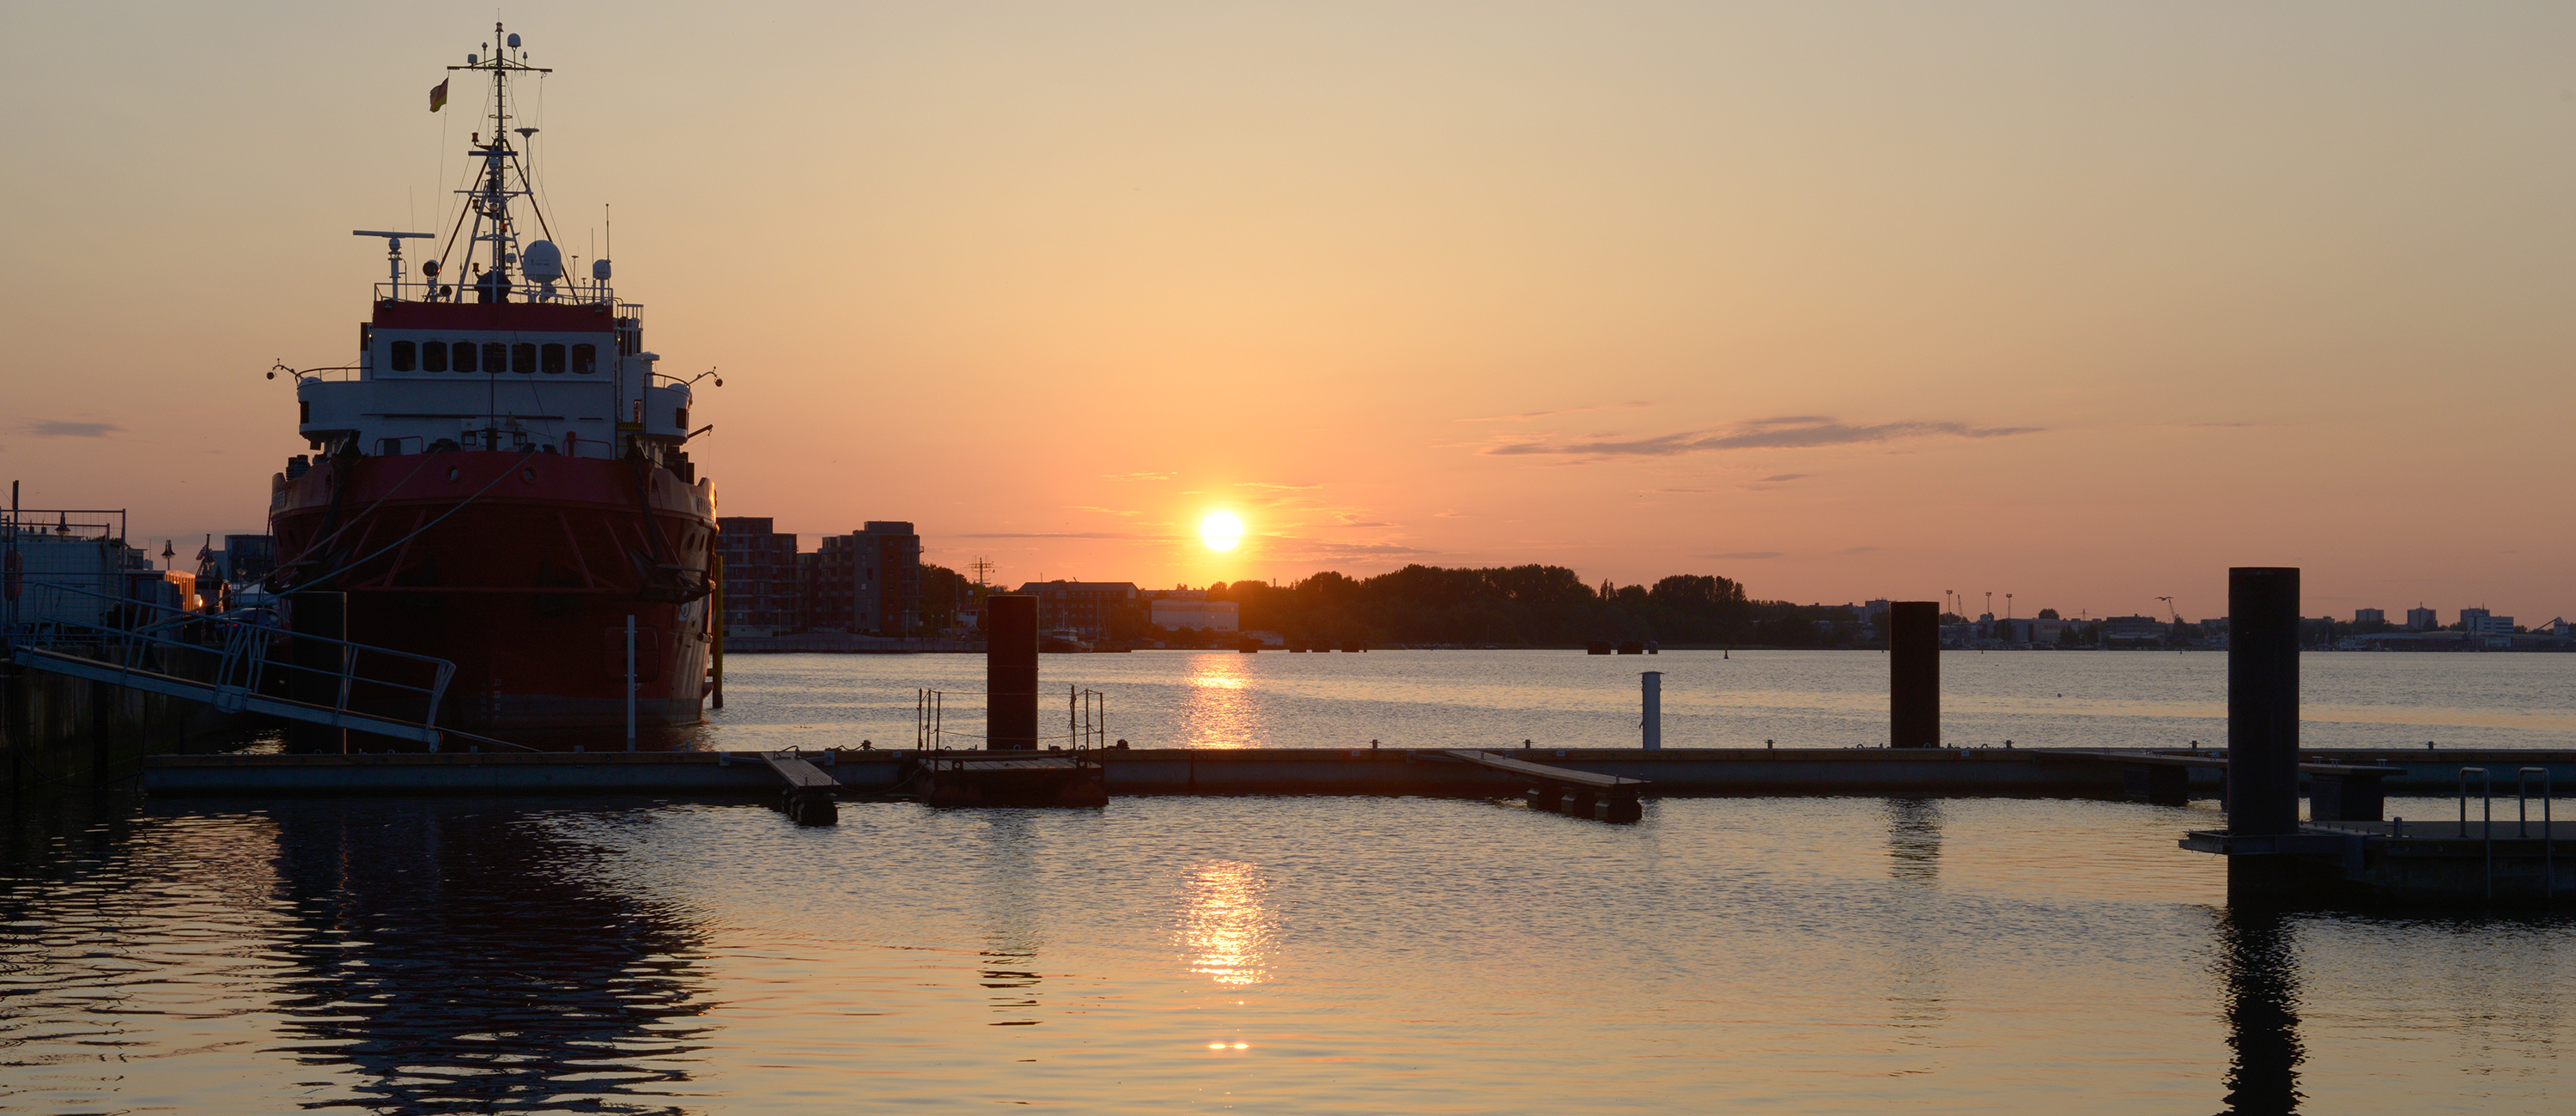 Fotografie Hafen Rostock bei Sonnenuntergang